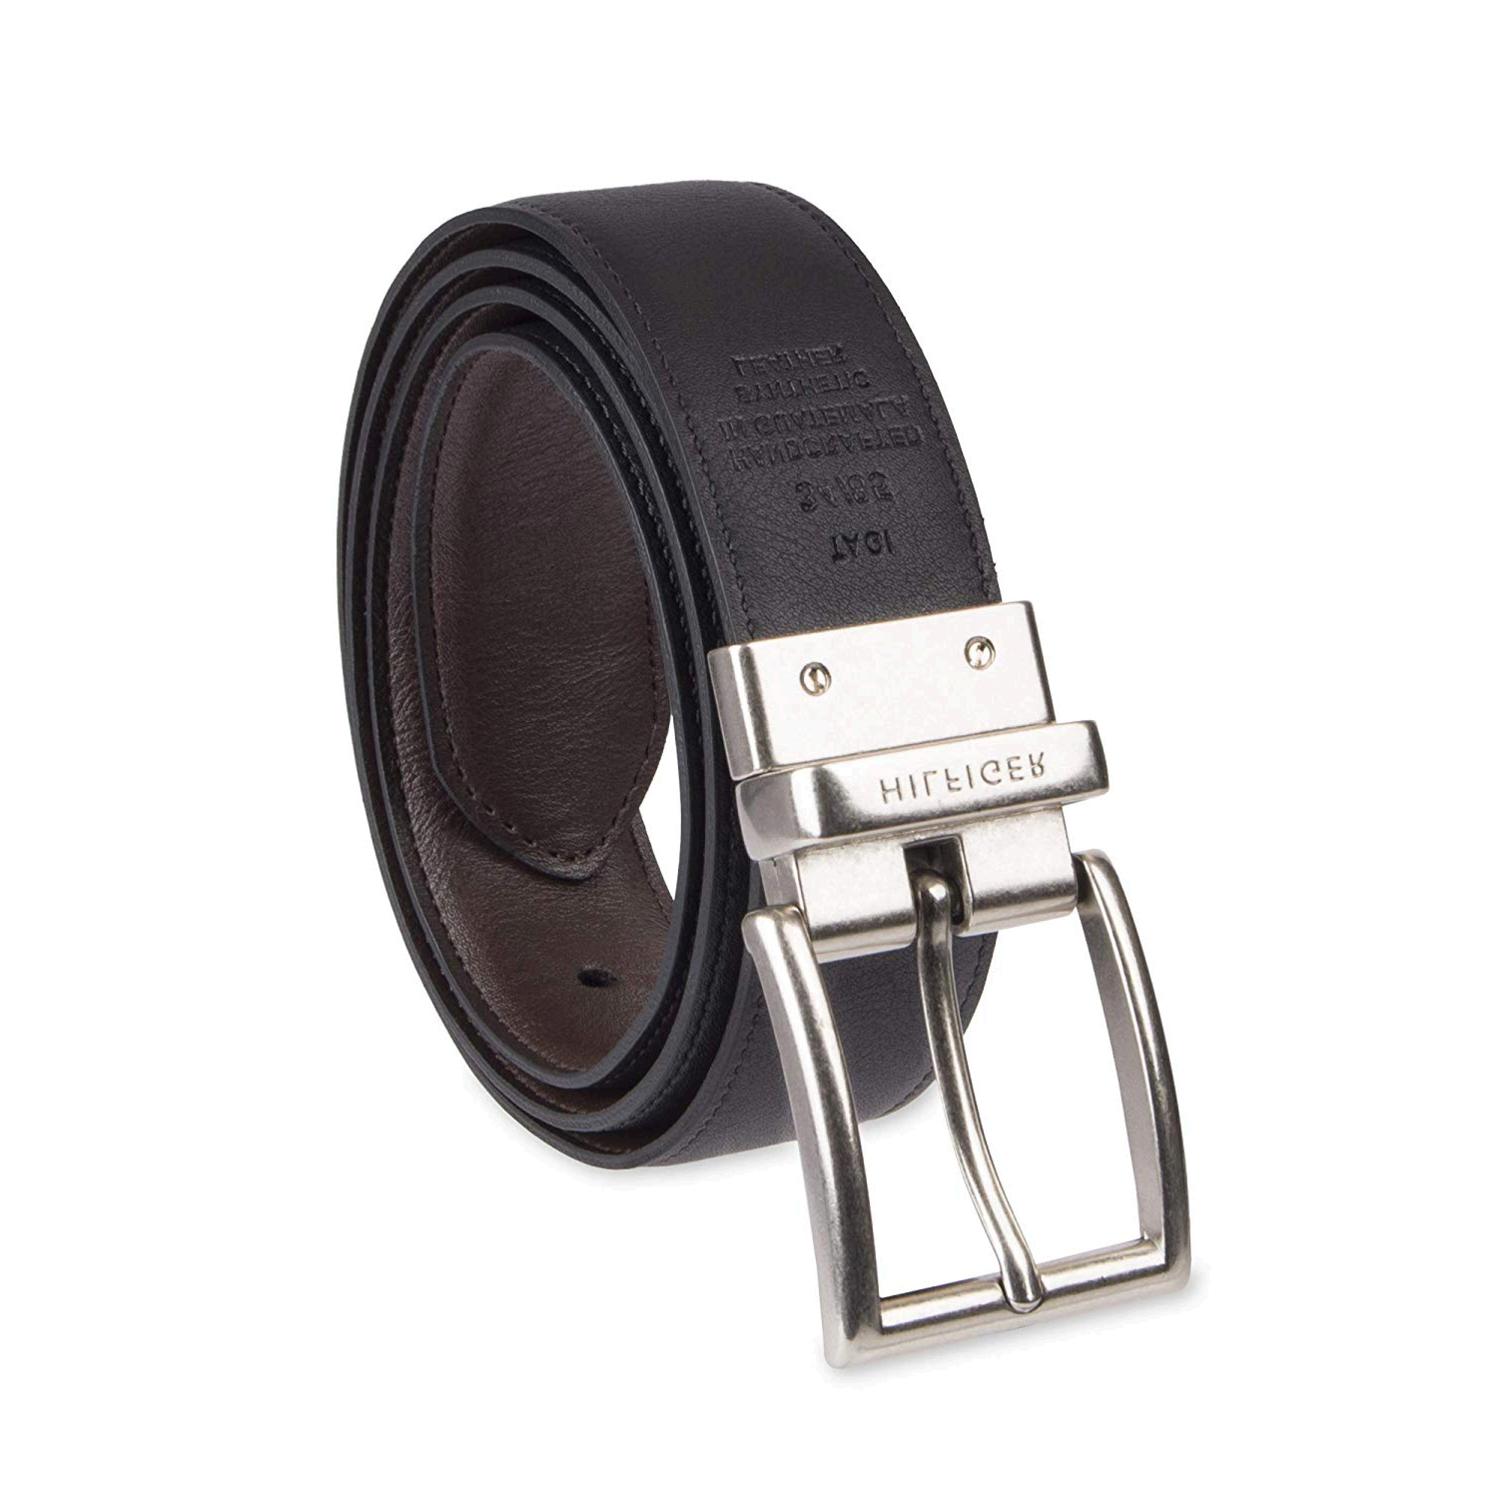 Tommy Hilfiger Reversible Leather Belt - Casual for Mens, Brown/Black, Size 34 f | eBay